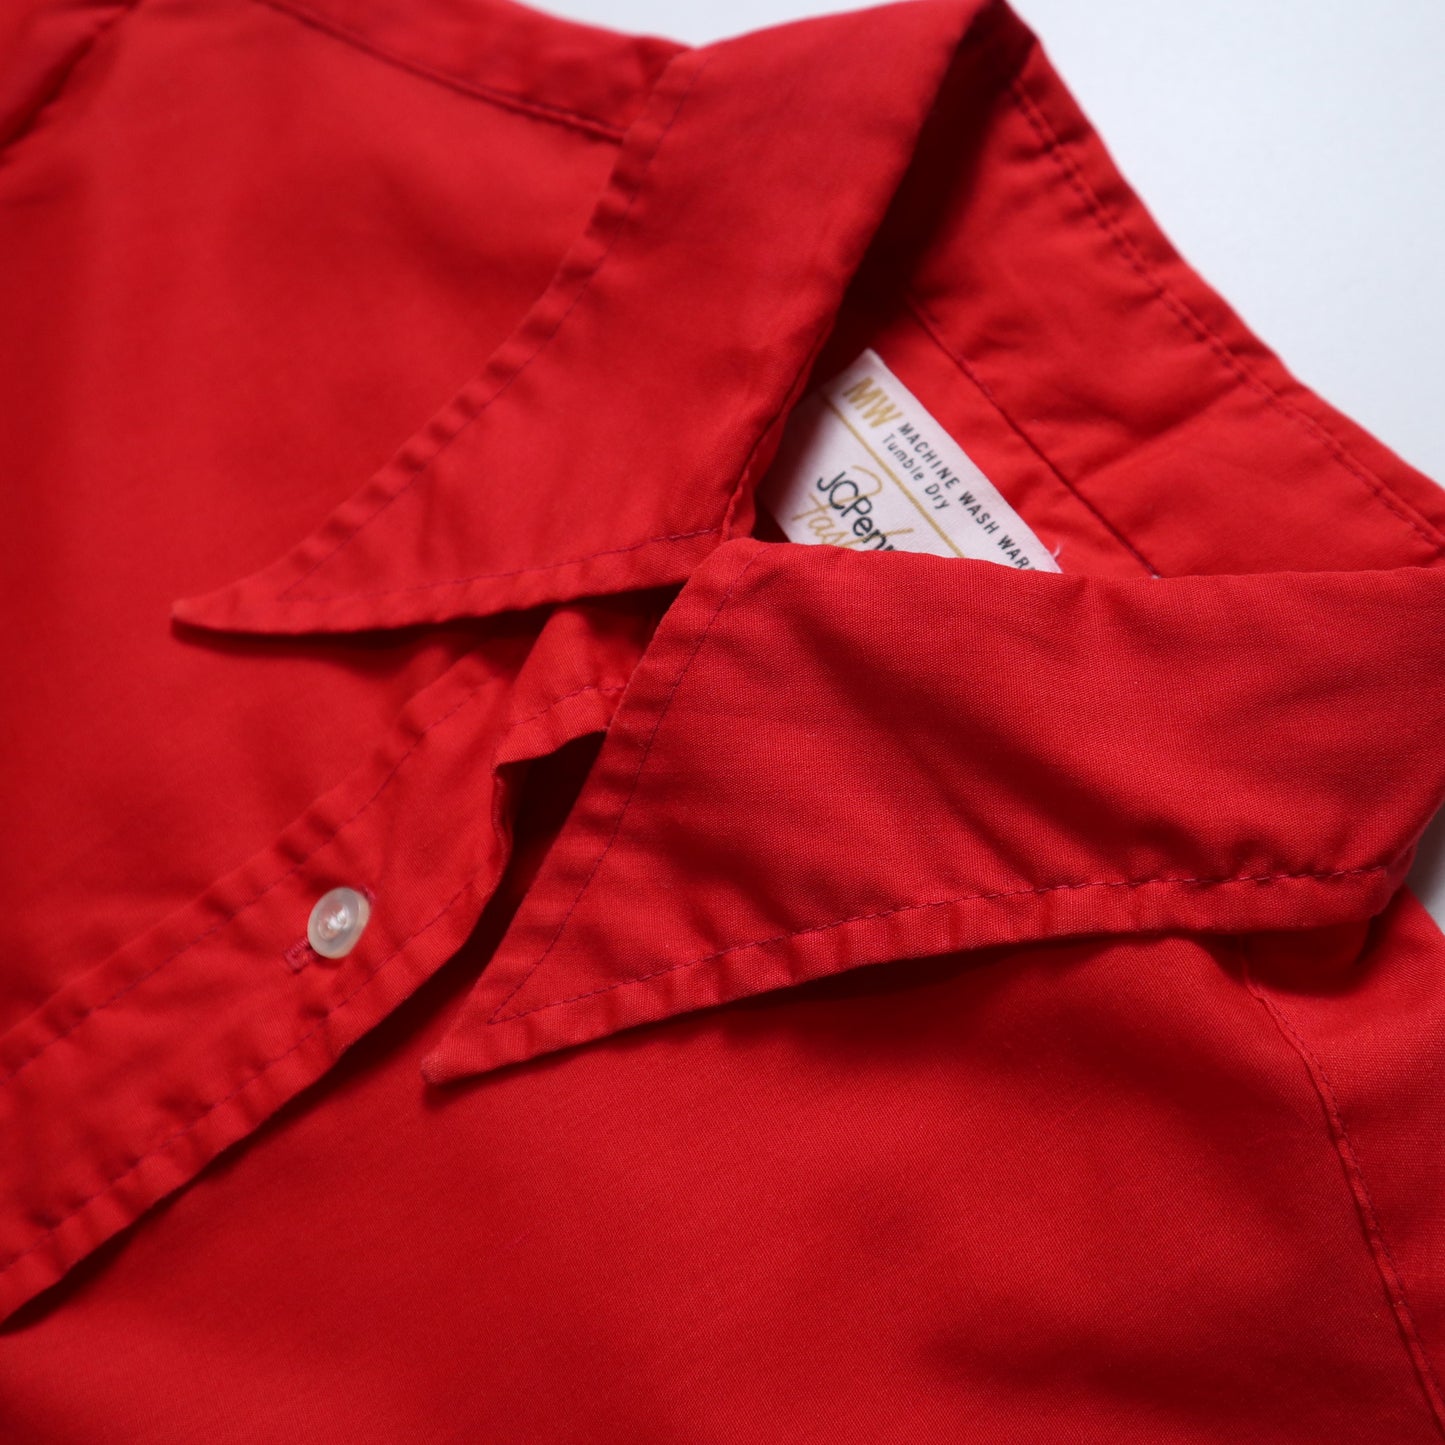 1970s JCPENNEY red arrow collar shirt